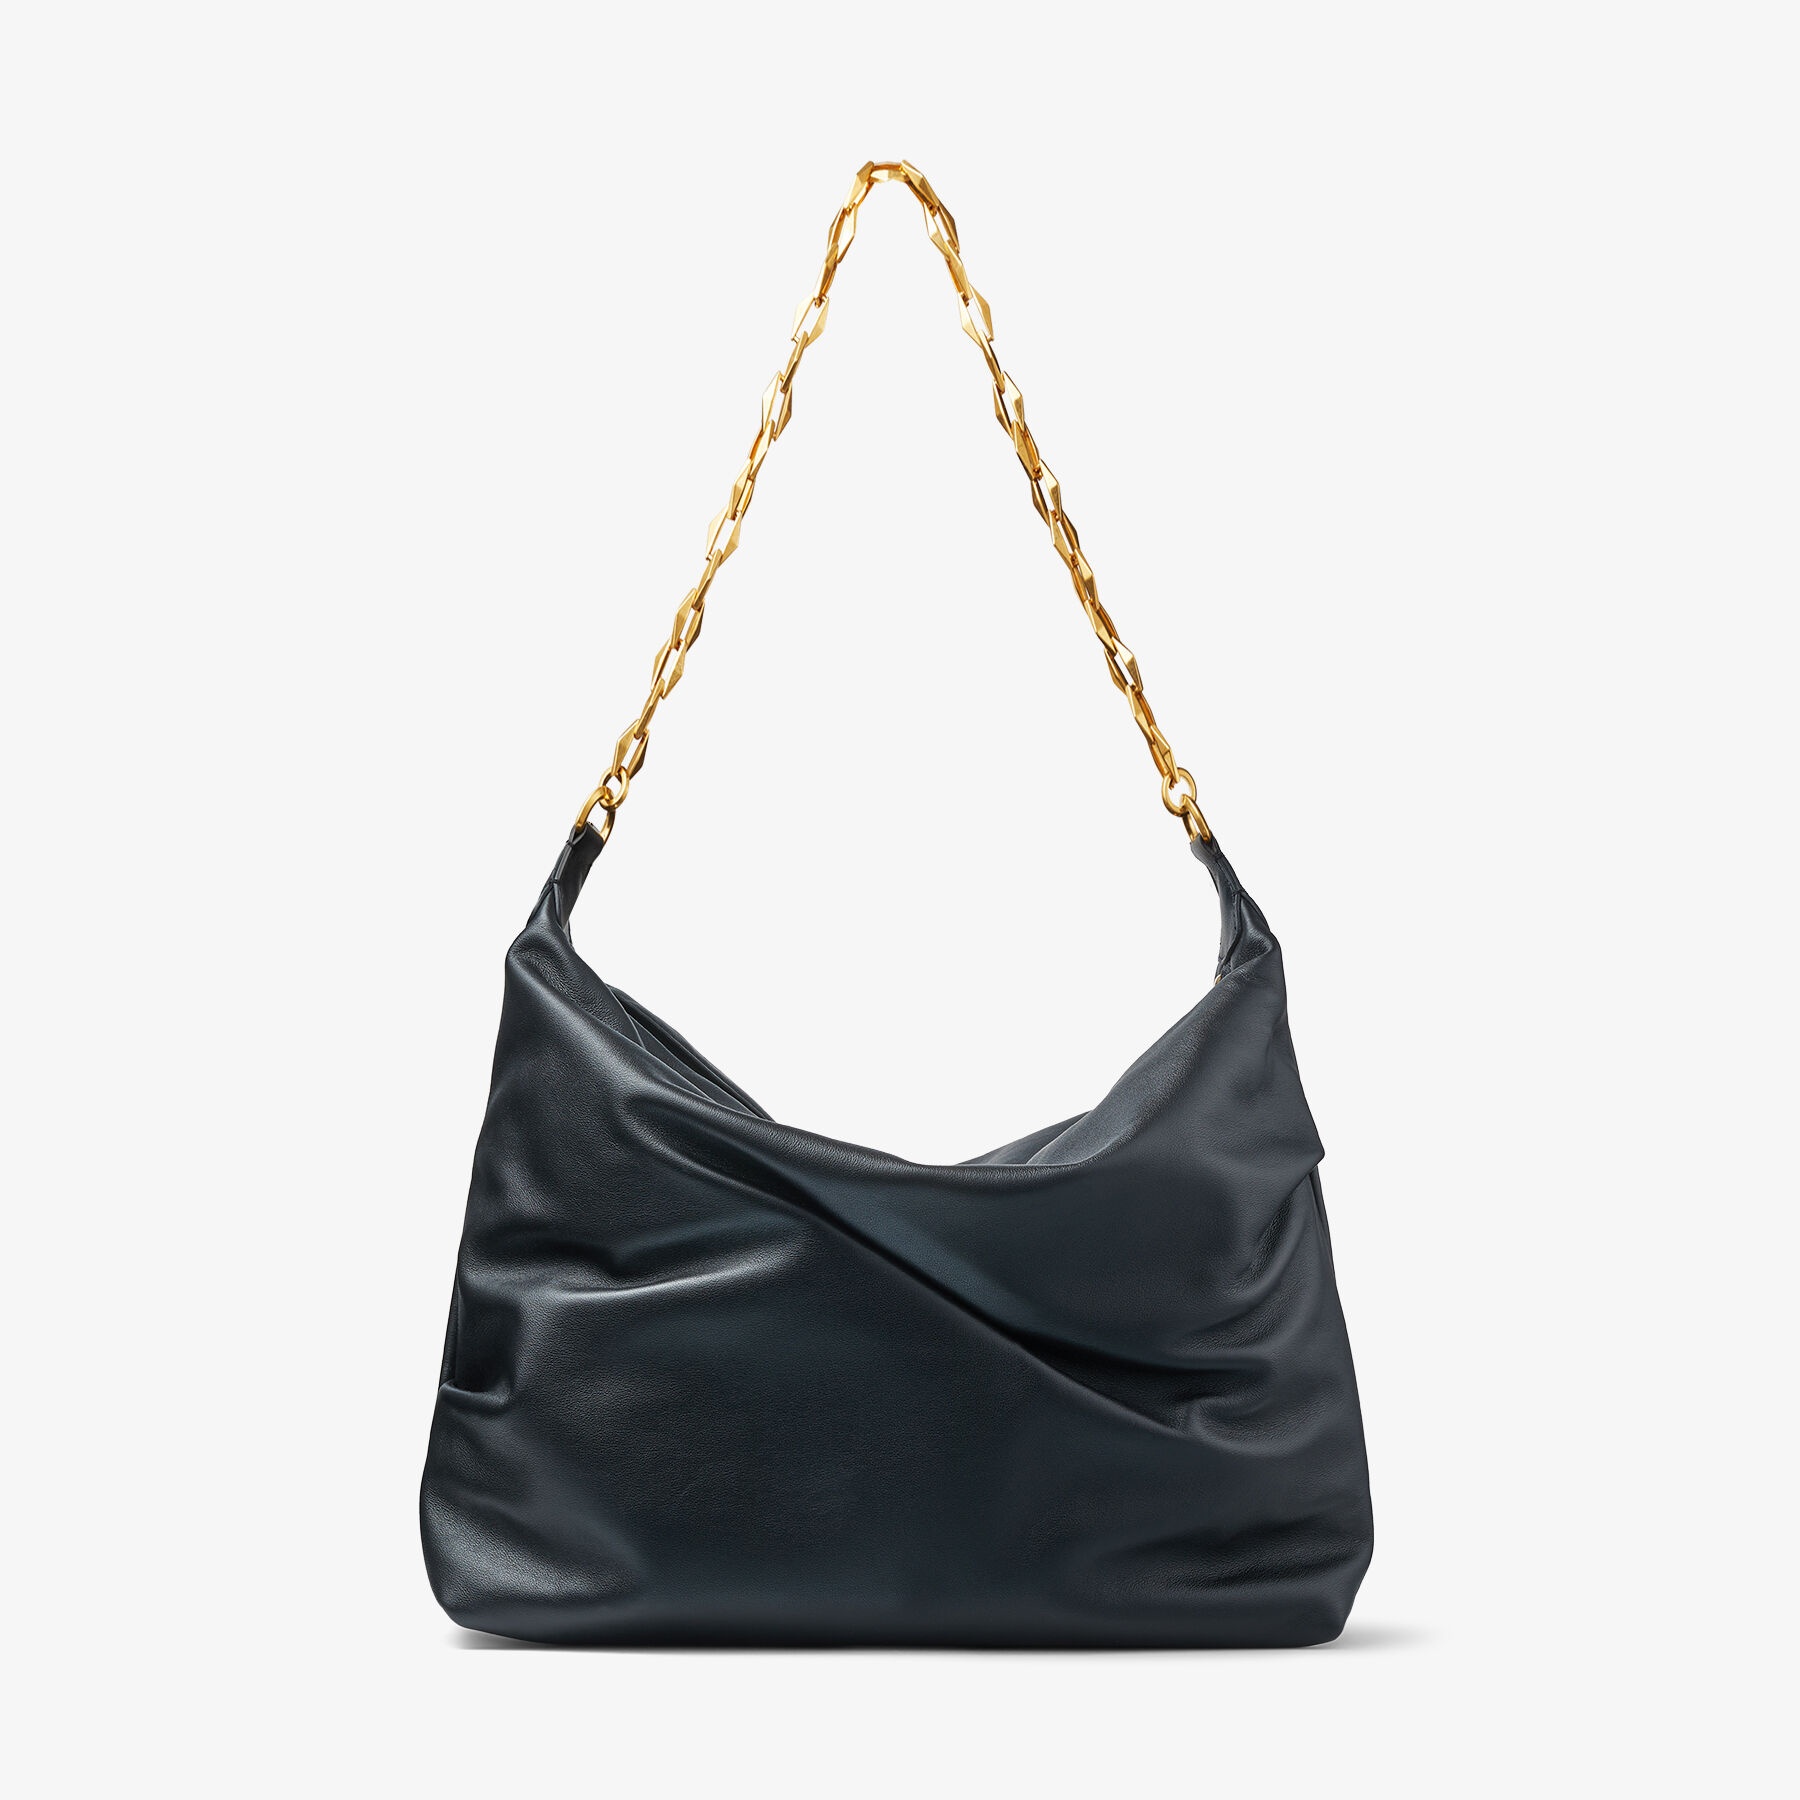 Diamond Soft Hobo M
Black Soft Calf Leather Hobo Bag with Chain Strap - 10